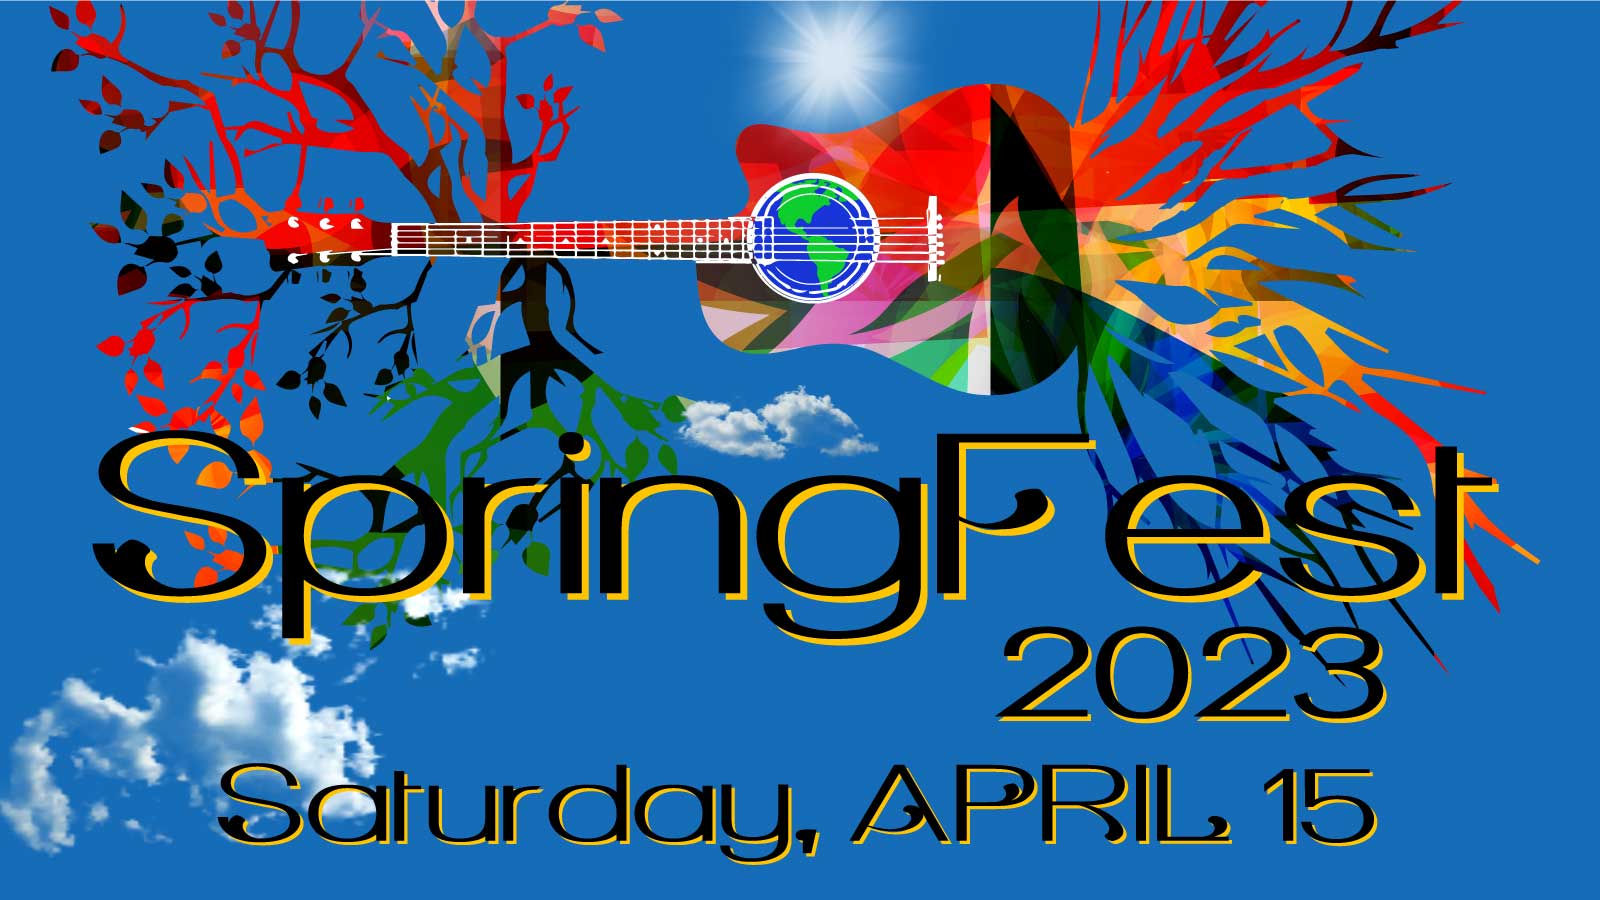 Outdoor Music Festival - Old Ellicott City's SpringFest 2023